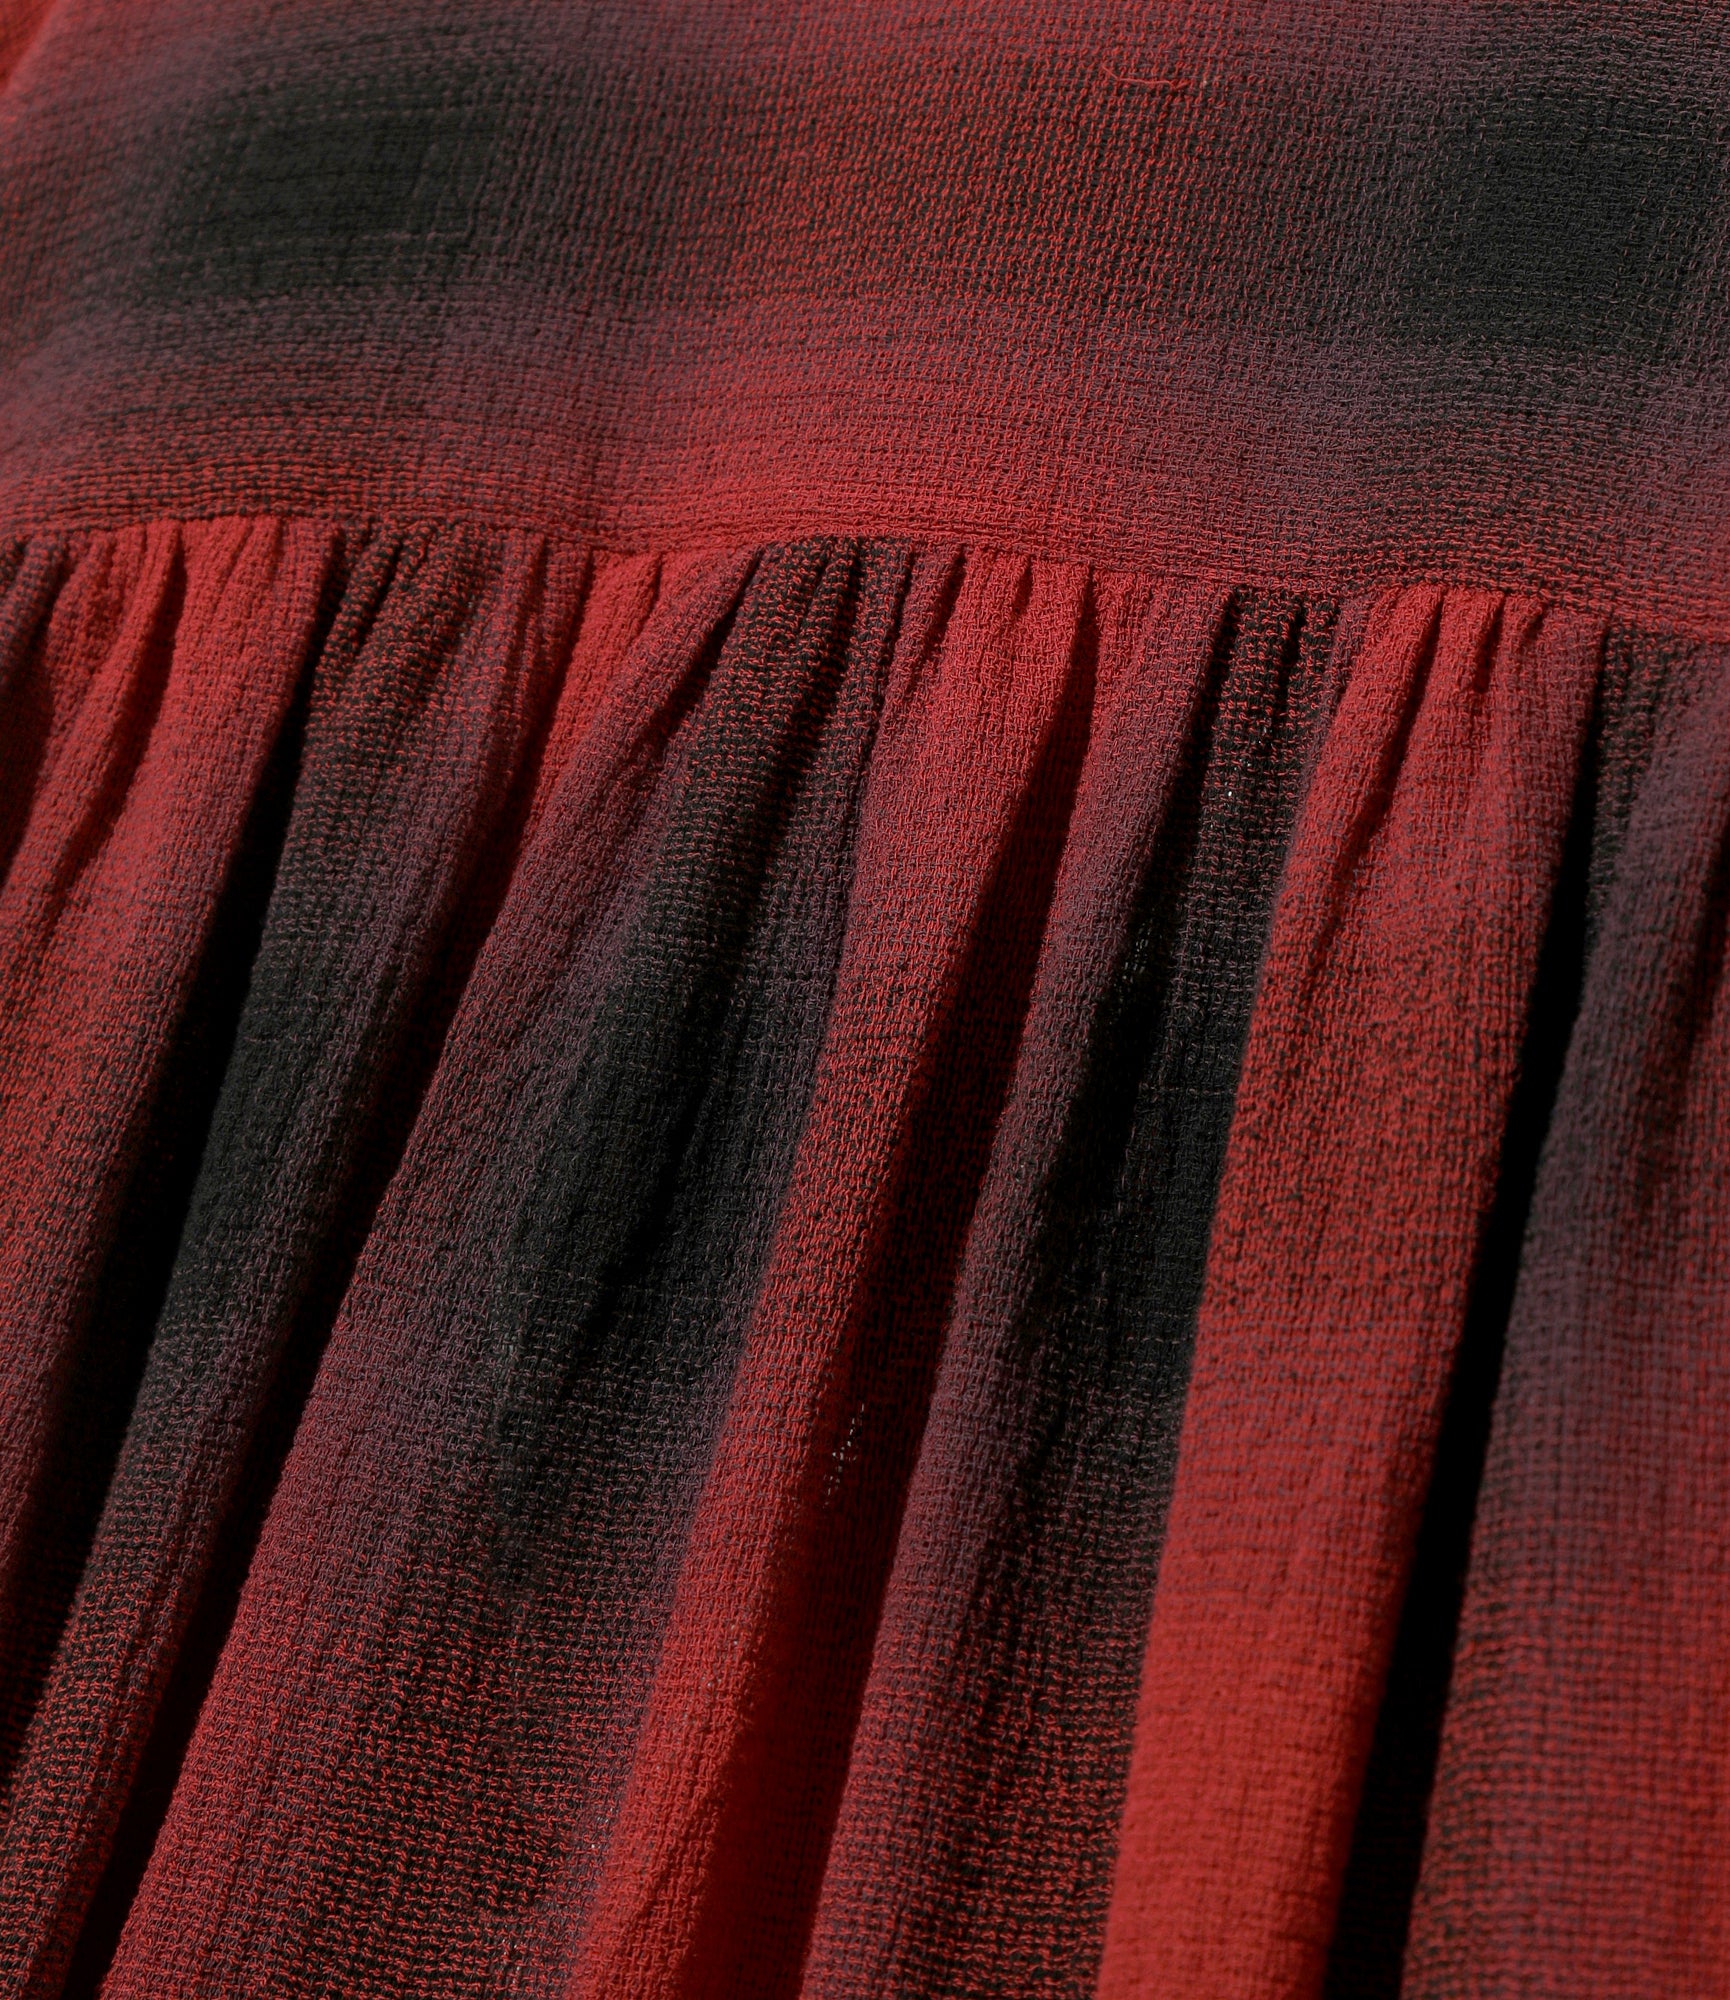 Painter Shirt - Red / Black - Cotton Boiled Cloth / Ombre Plaid